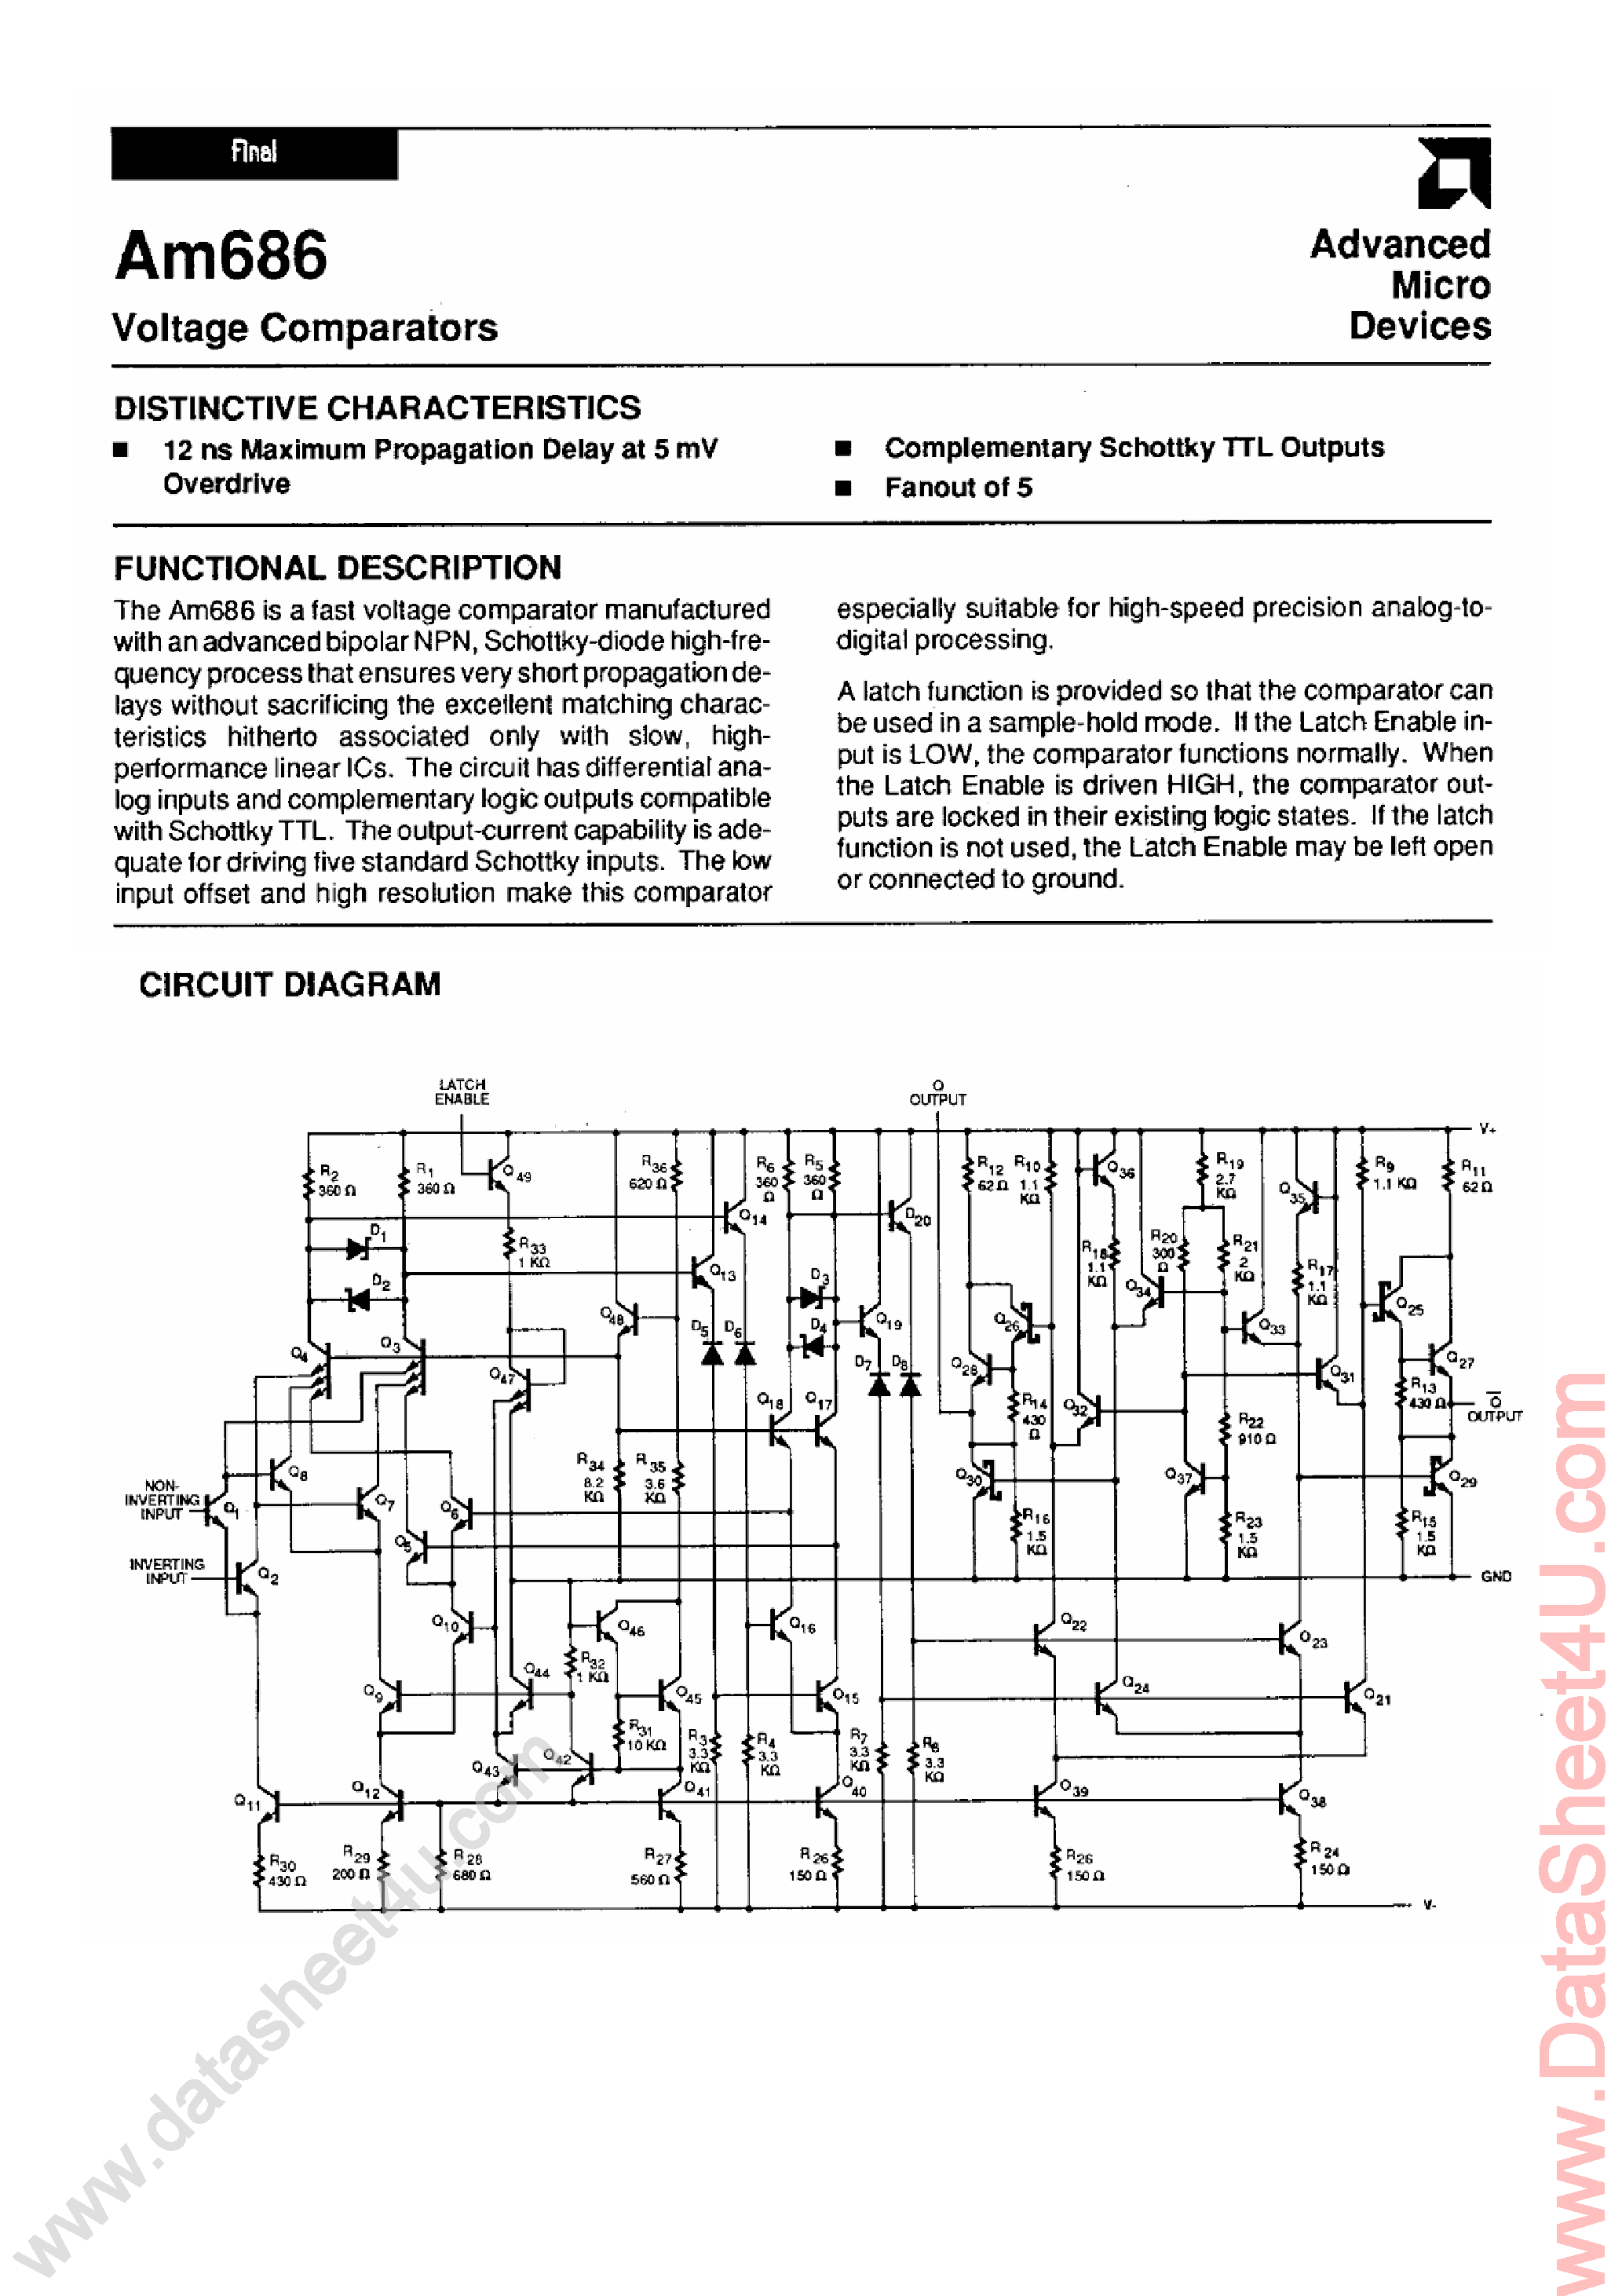 Datasheet AM686 - Voltage Comparators page 1